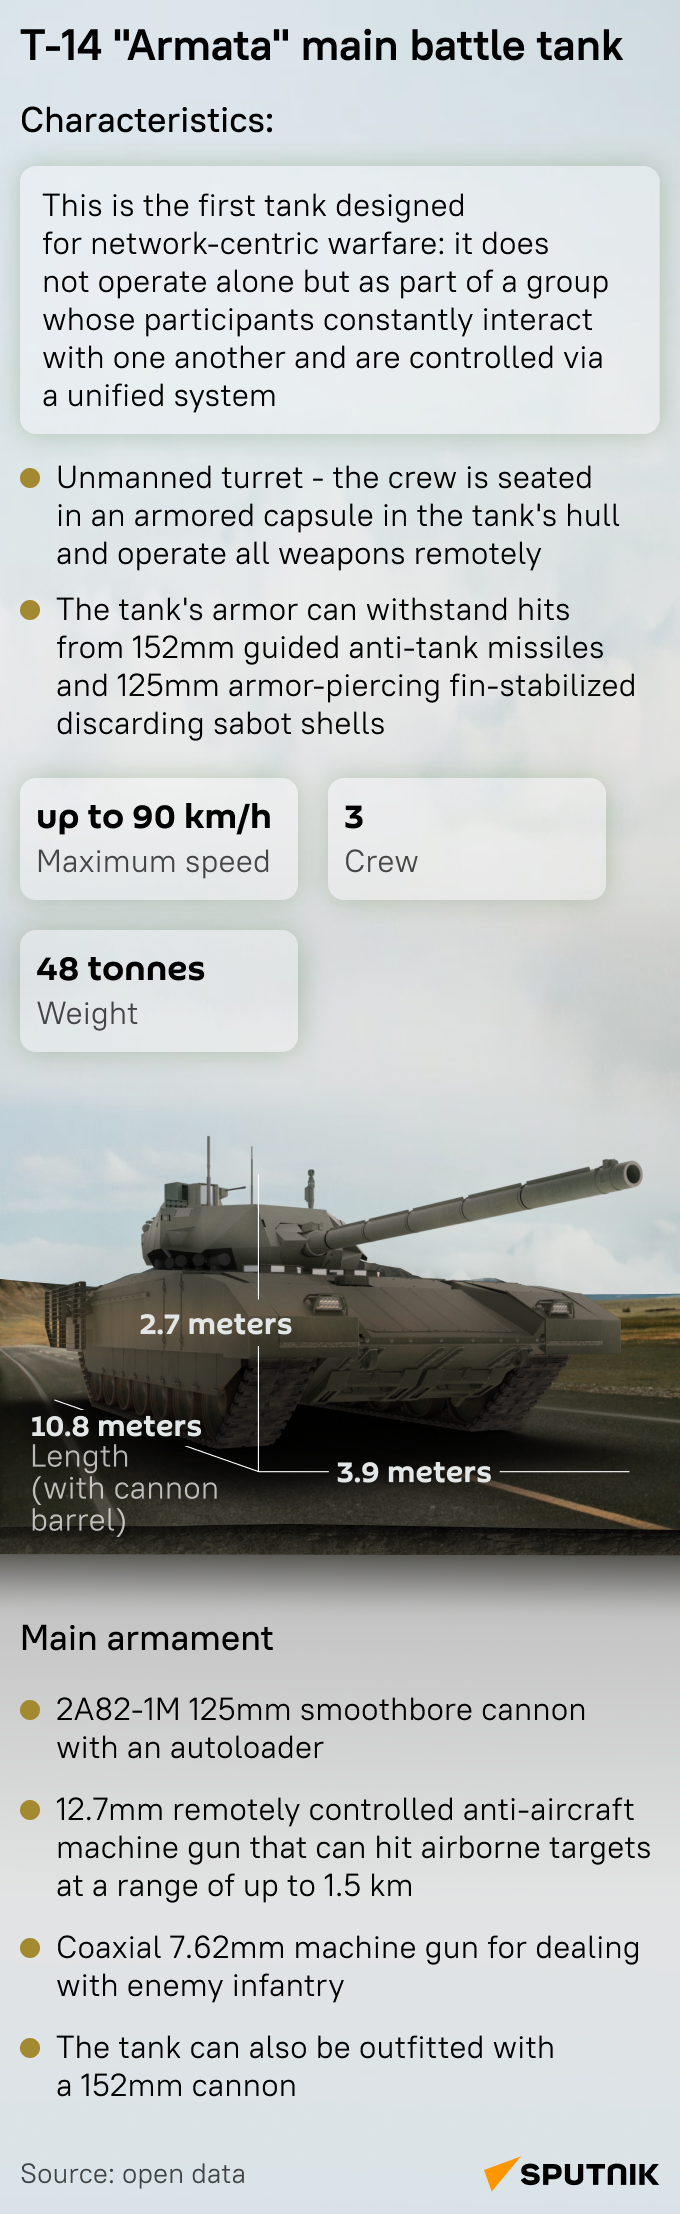 T-14 Armata: What is Known About Russia’s Advanced Main Battle Tank - Sputnik International